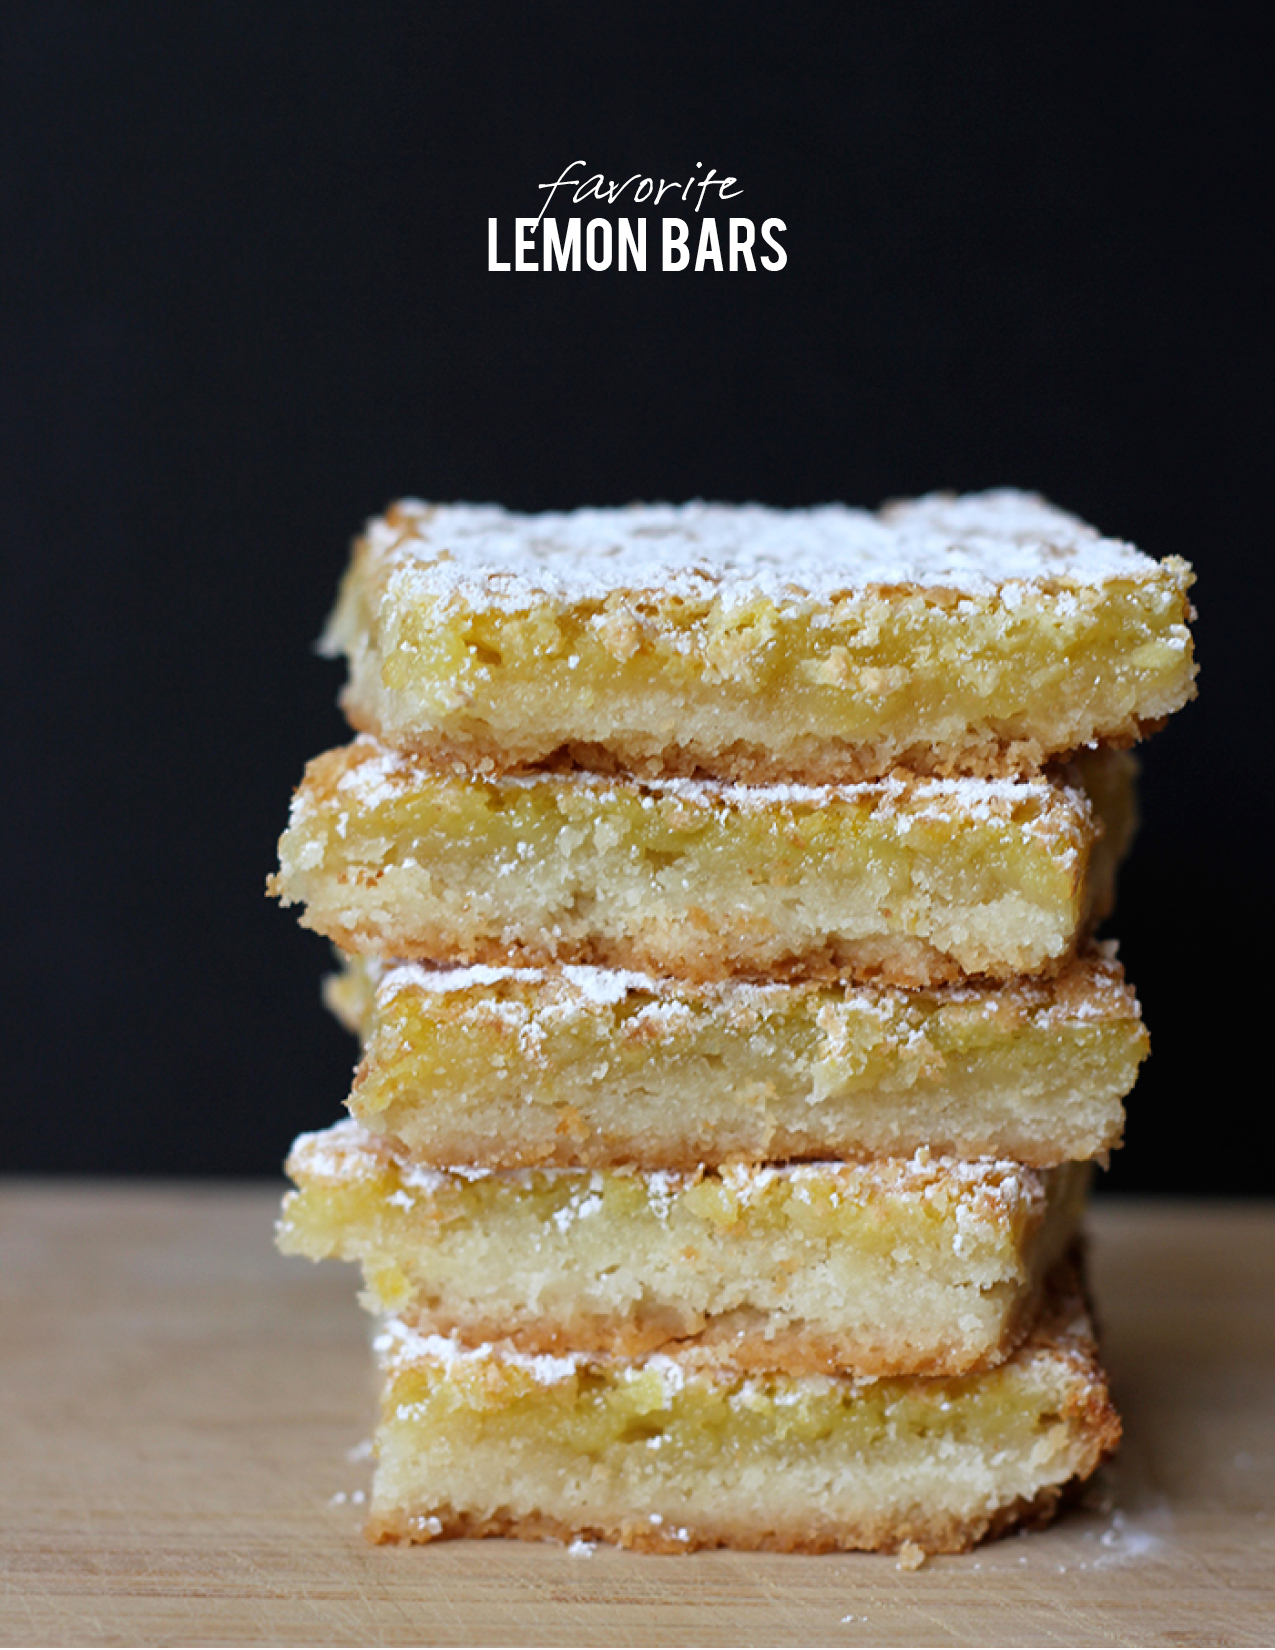 Lemon bars recipe // aliceandlois.com